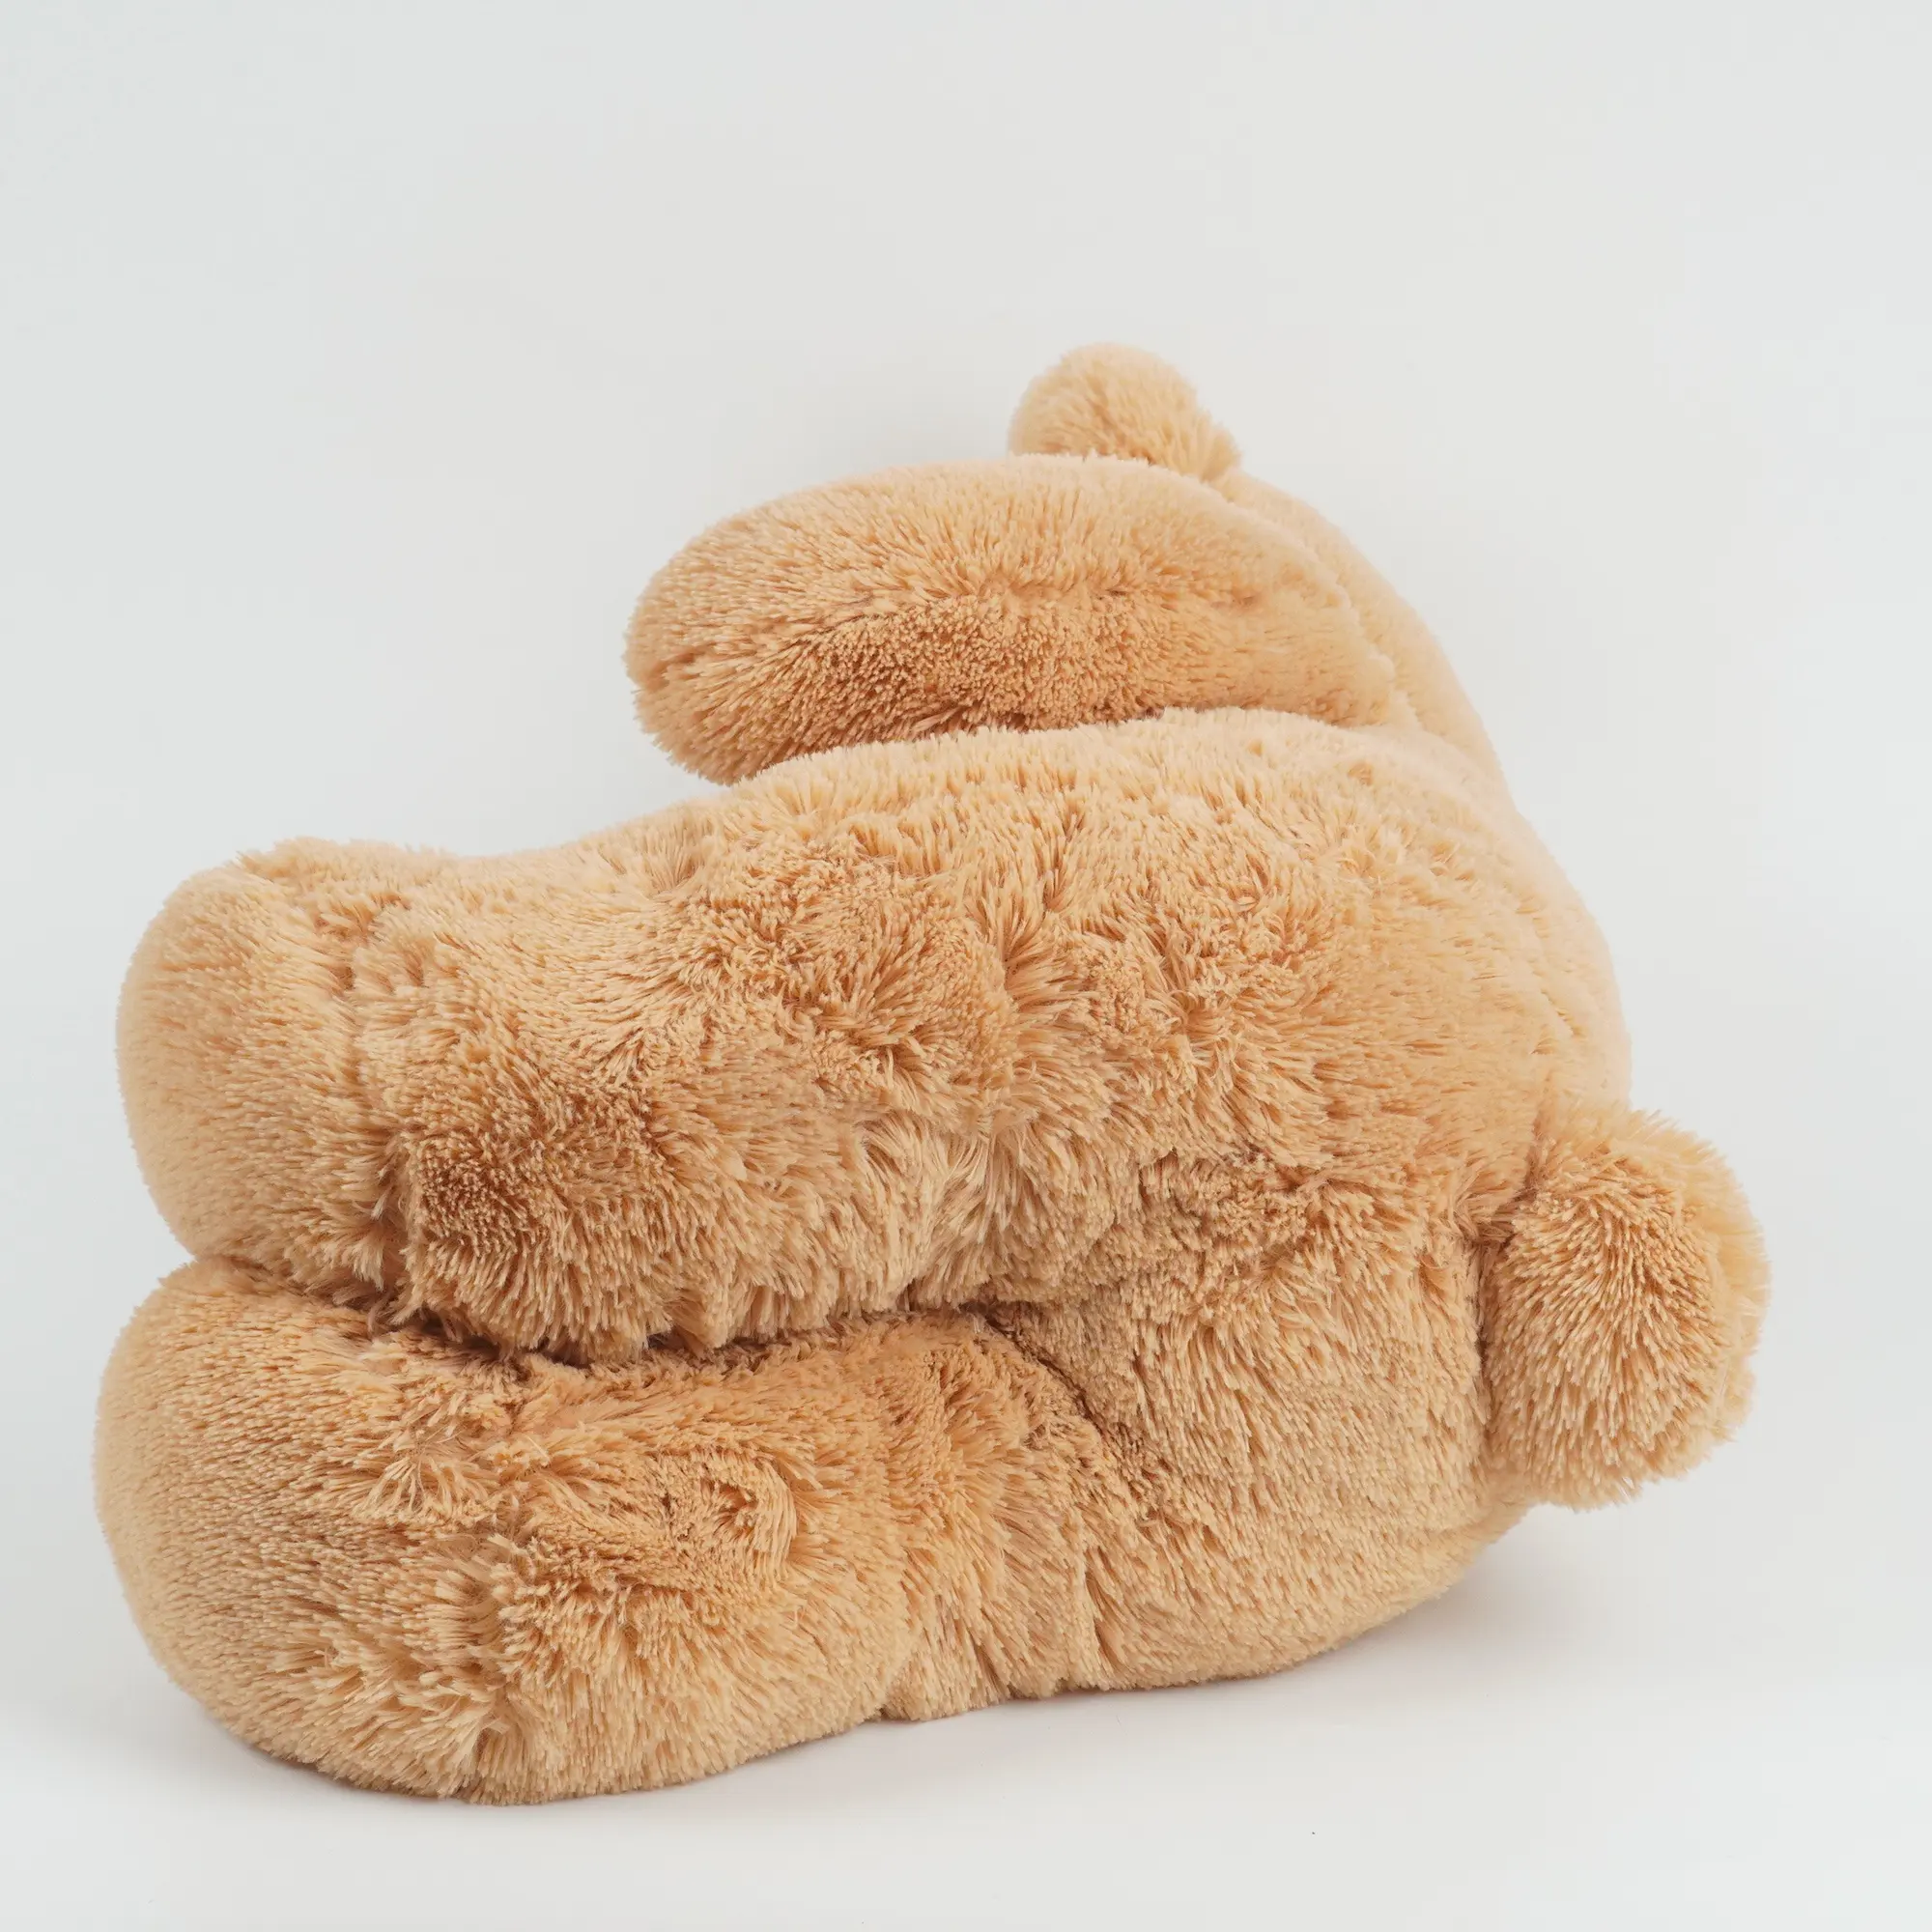 Diskon Besar Grosir Mainan Kulit Beruang Teddy Besar Lucu Lembut Tidak Diisi 100Cm Kulit Beruang Mewah Hadiah untuk Promosi